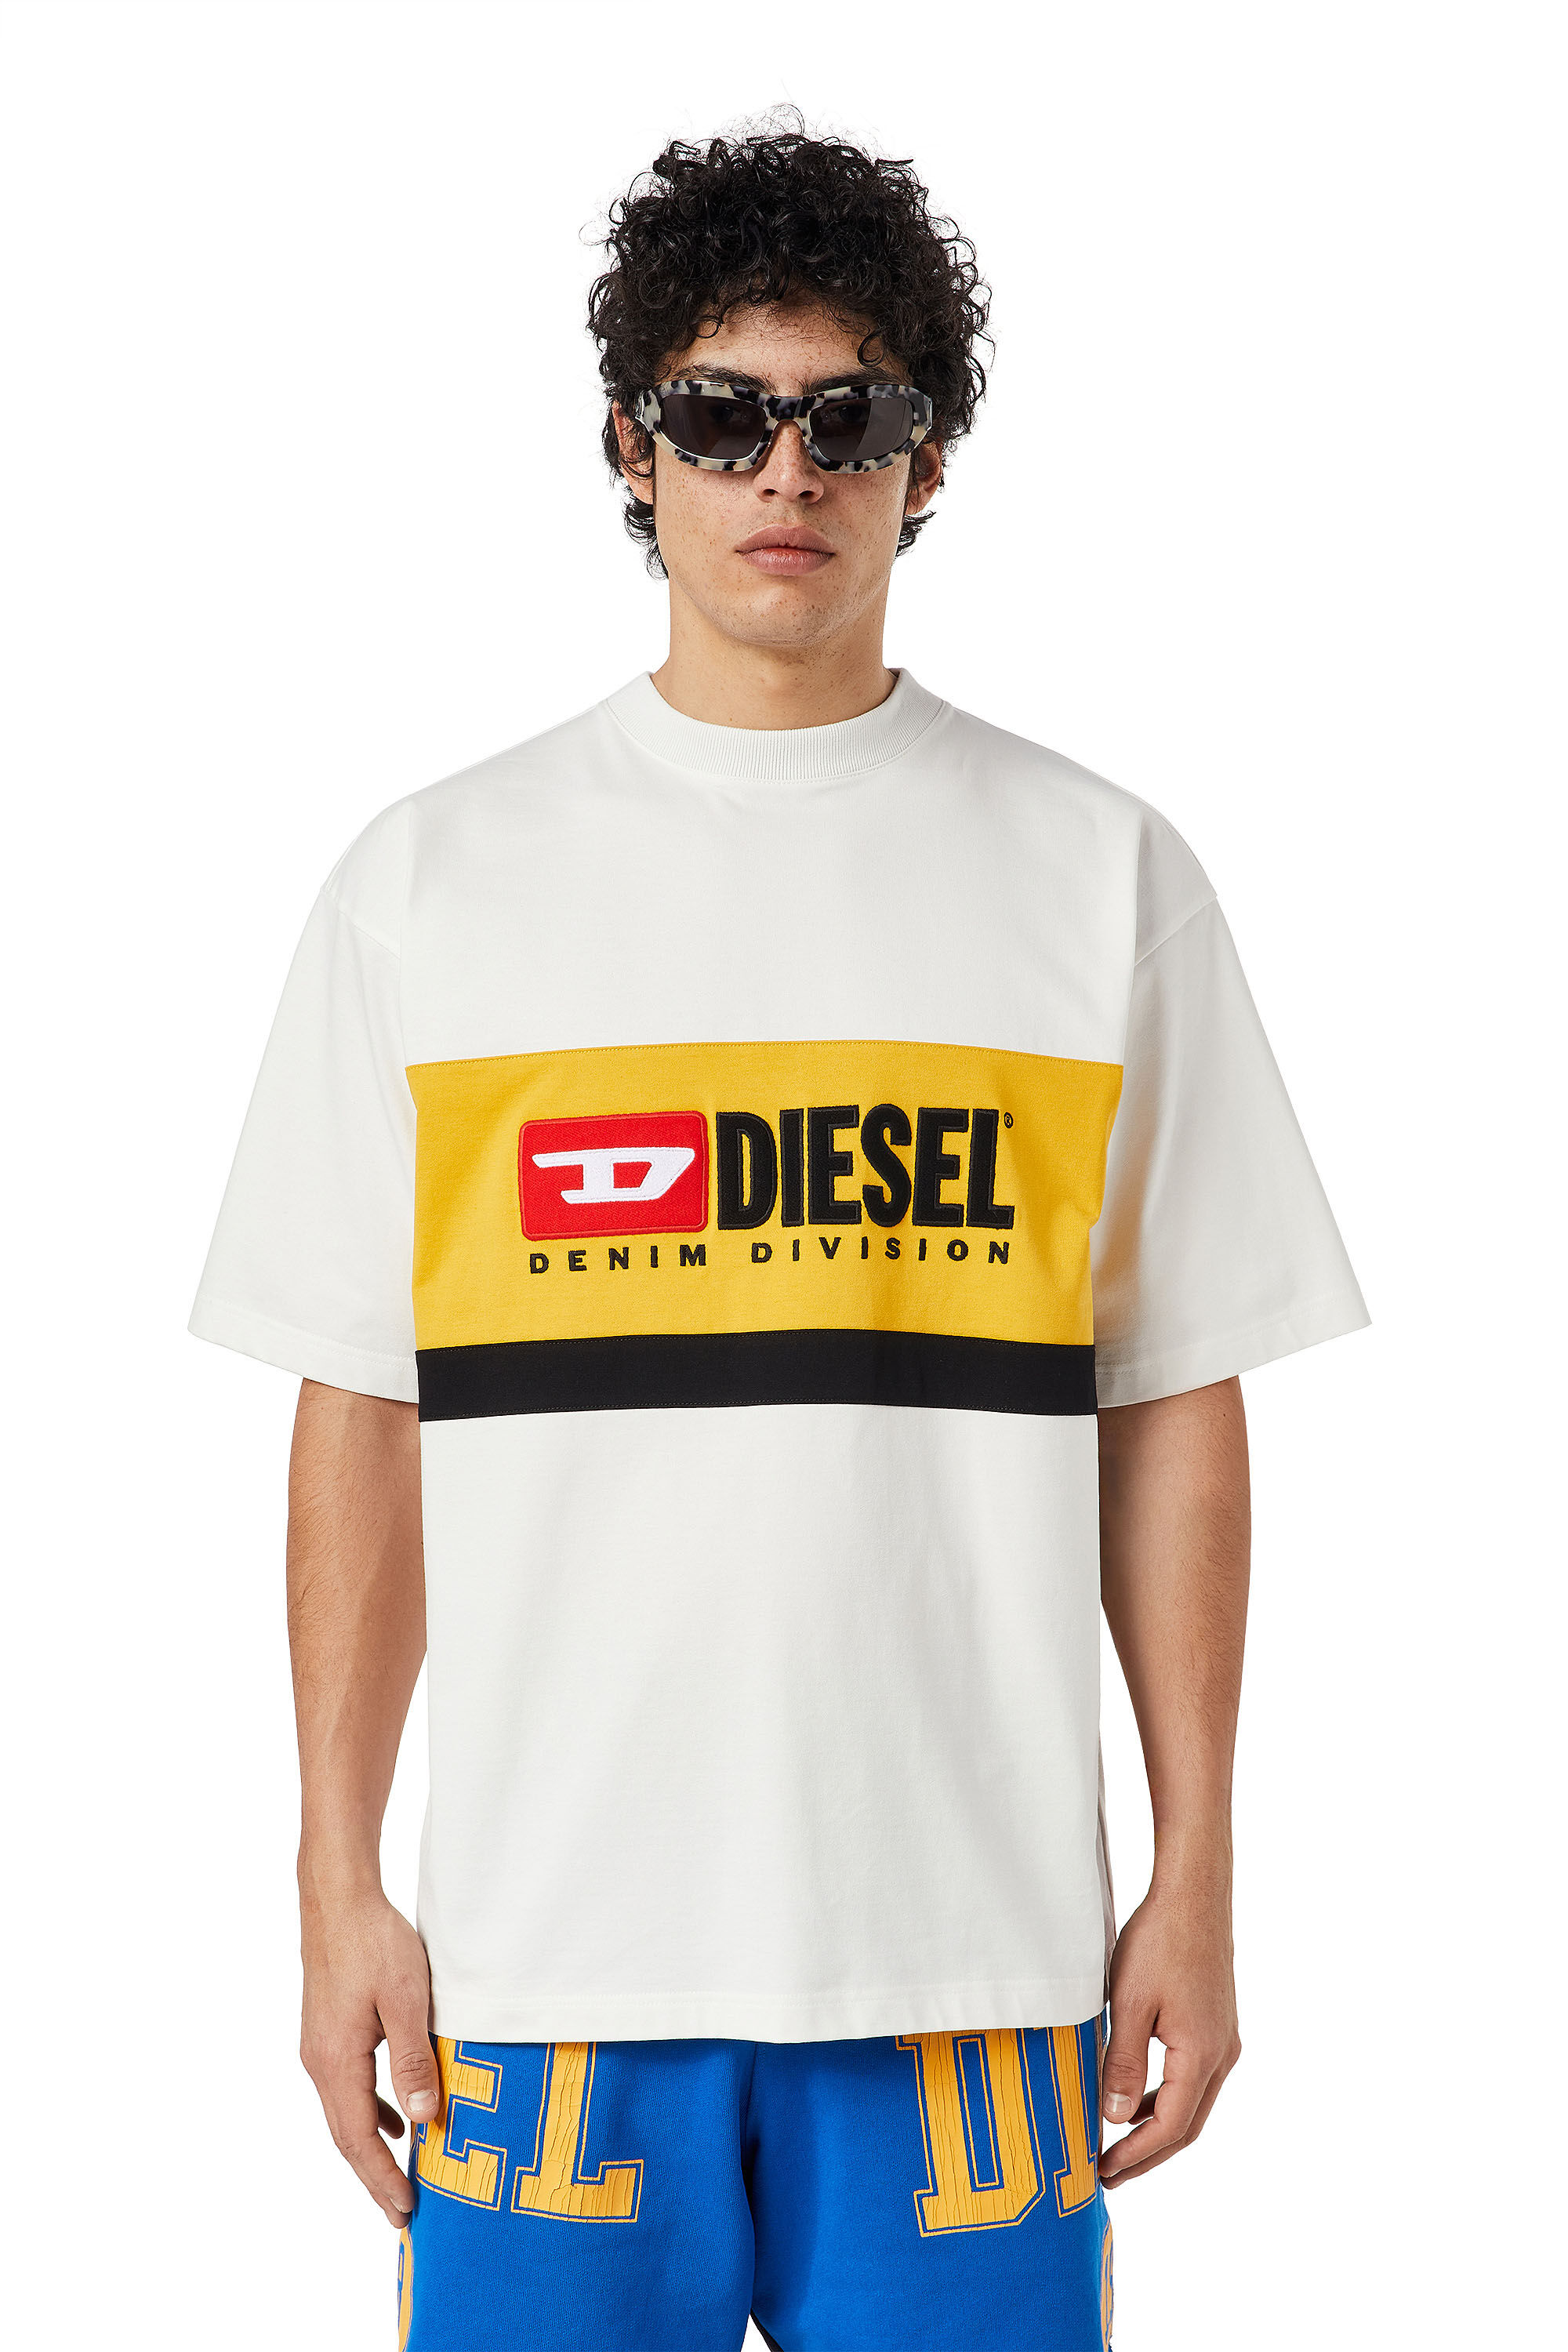 Diesel - T-STREAP-DIVISION,  - Image 3